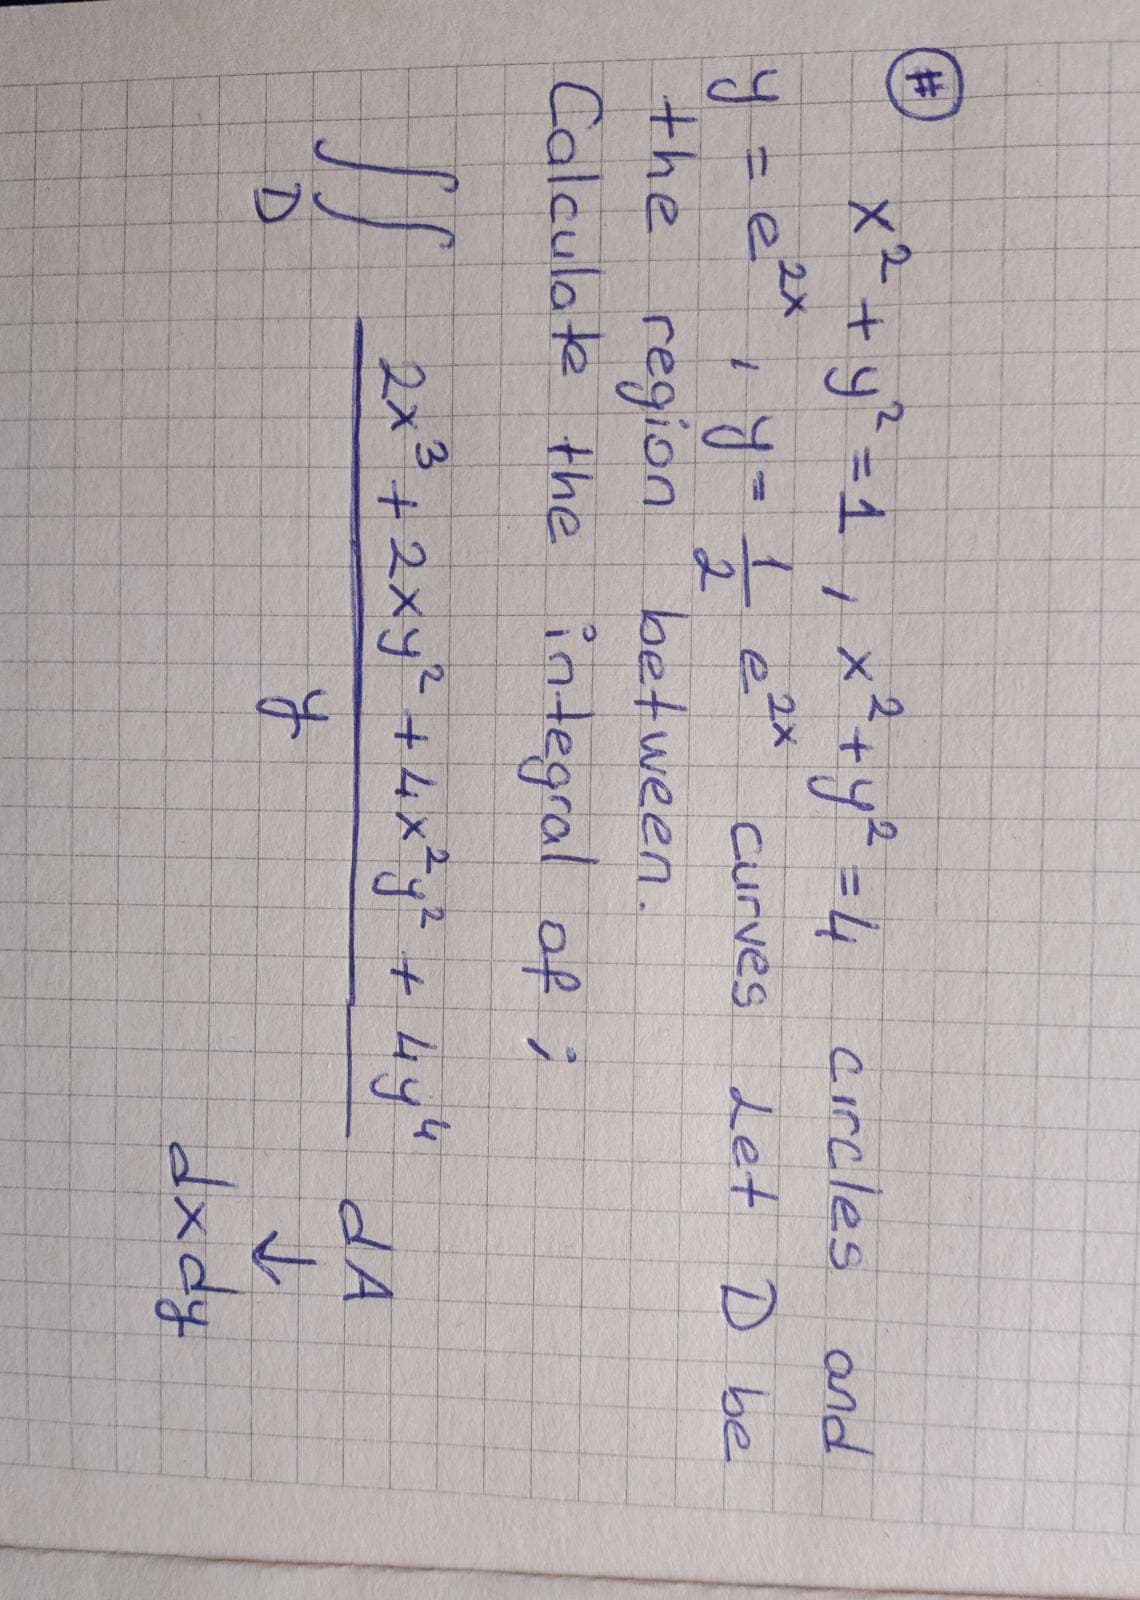 %23
x²+ y? =d, x²+y? =4 circles and
x²+y%=1
2X
curves Let D be
the region
2.
between.
Calculate the integral af ;
JJ
2x²+2xy? +4x*j% + 4yh
dA
3
D.
dxdy
